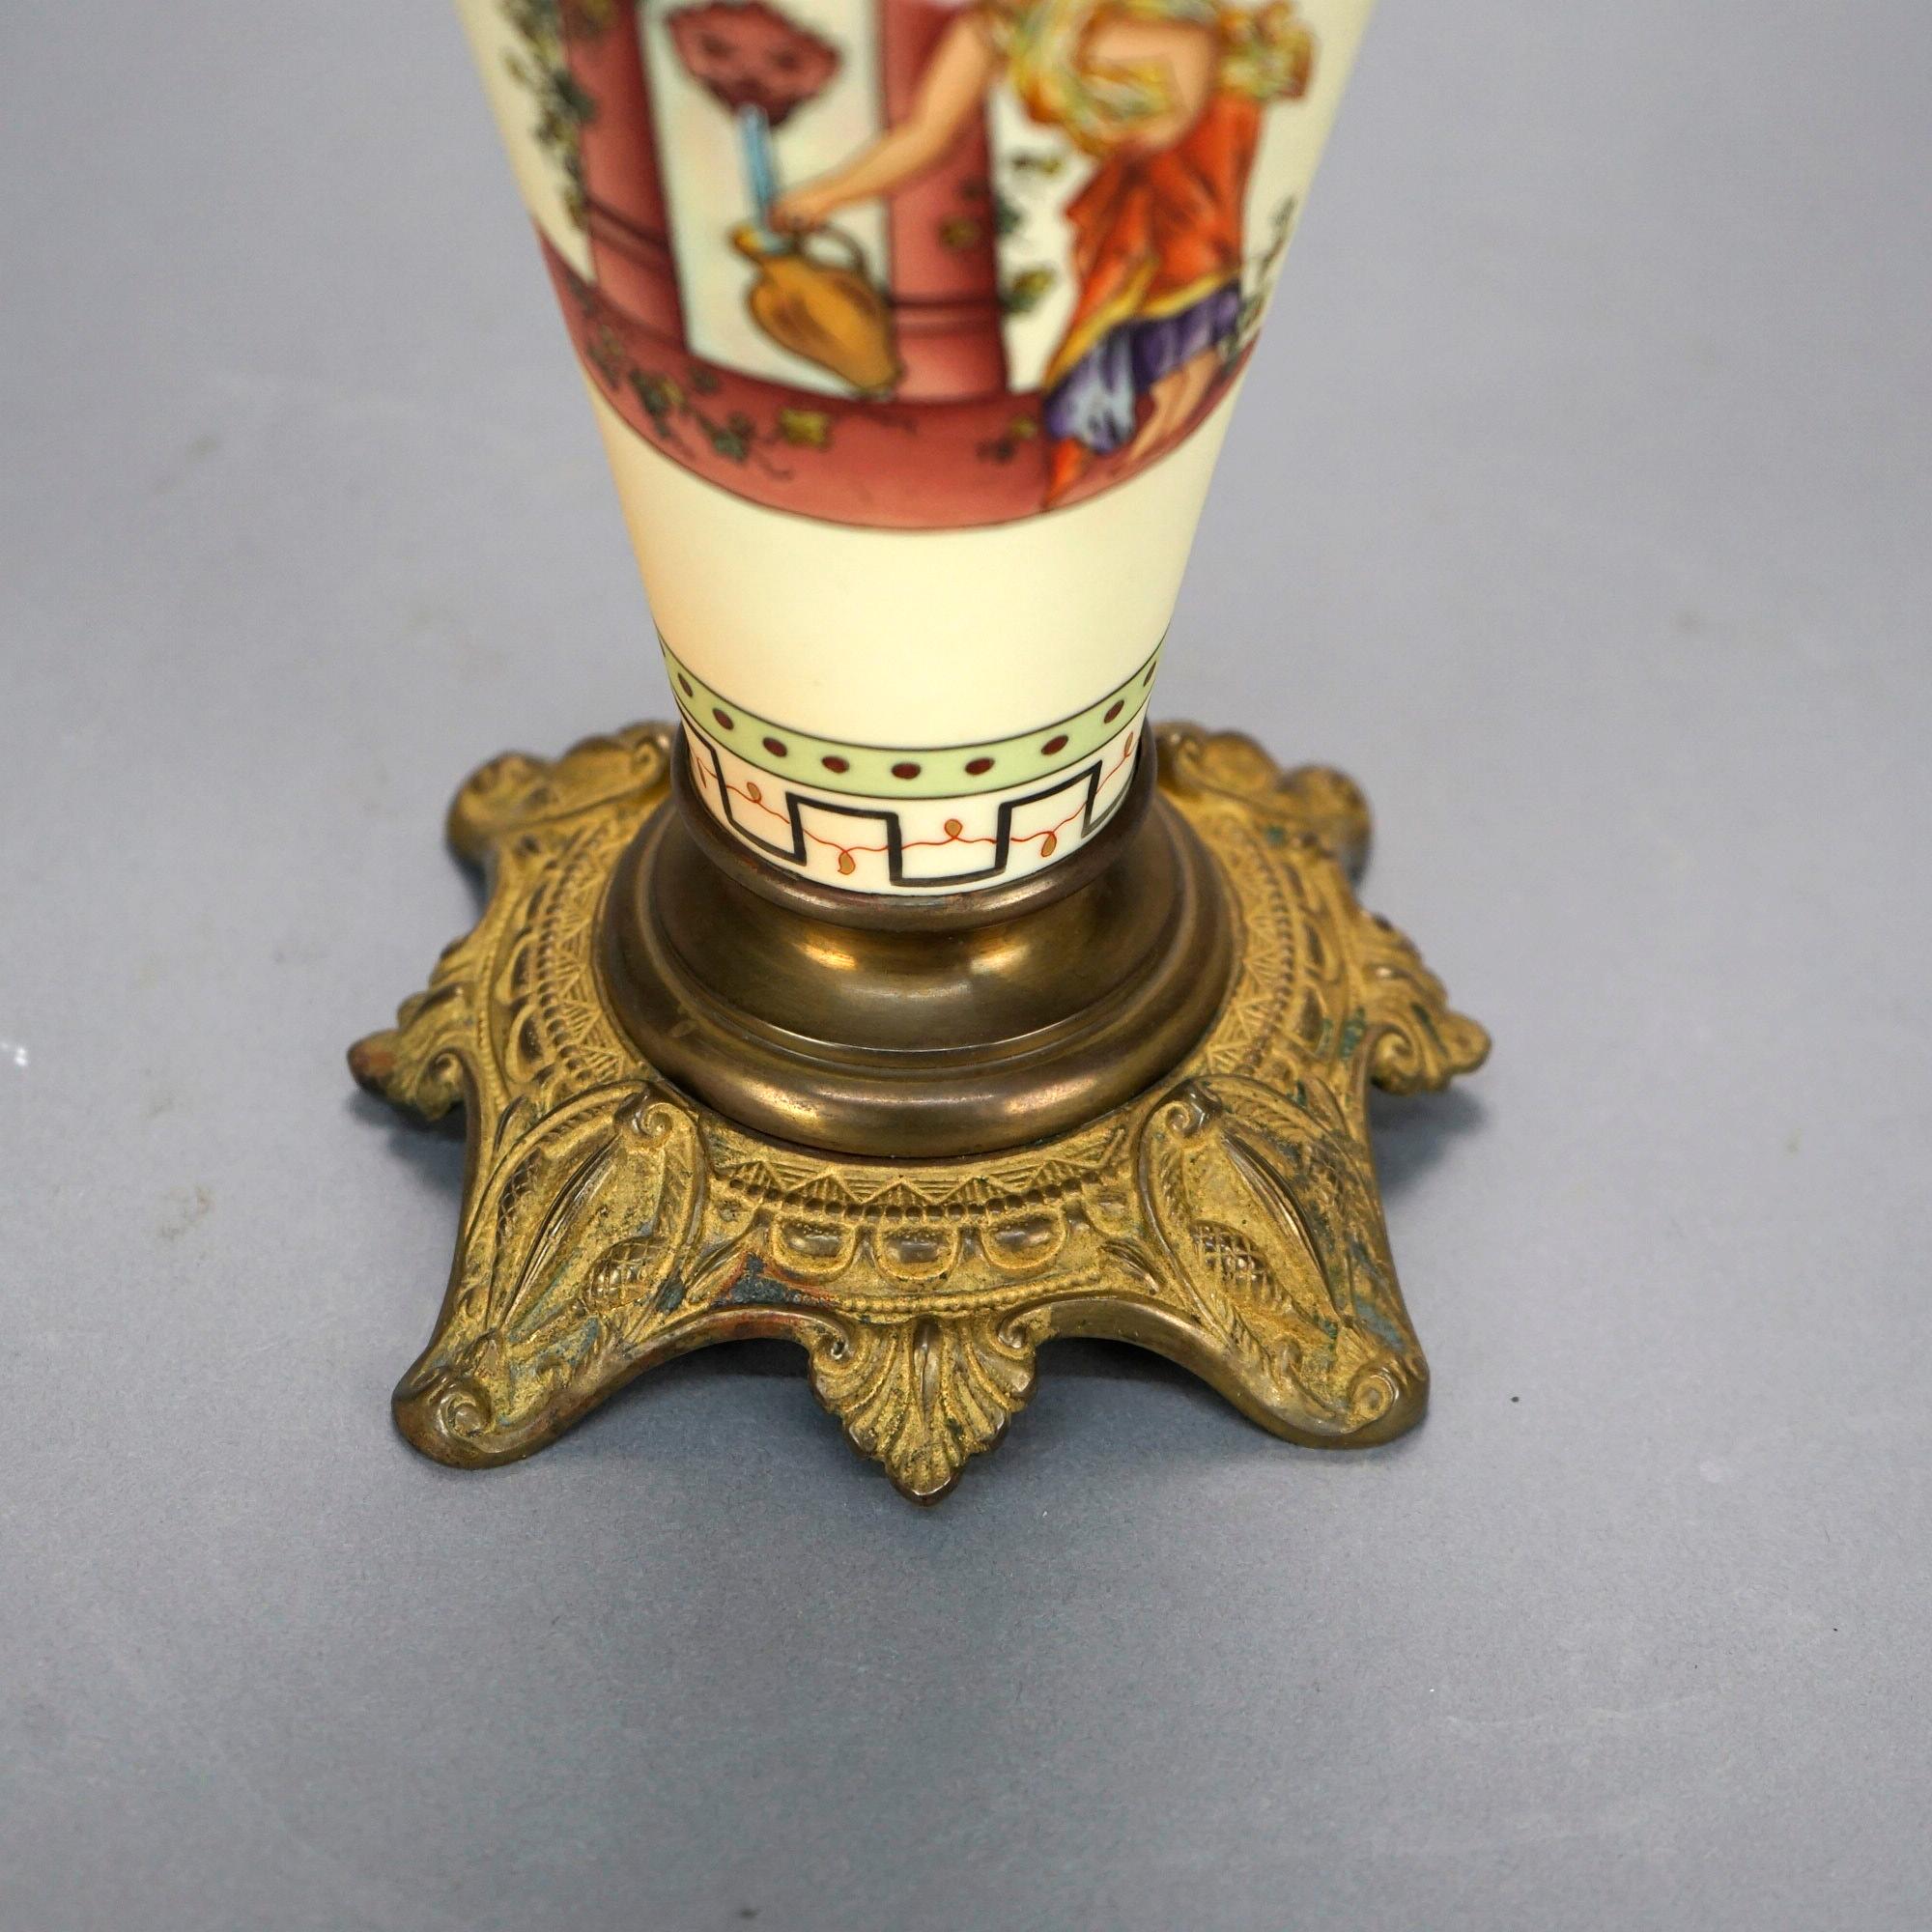 Antique Italian Hand Painted Porcelain Banquet Oil Lamp with Genre Scene, 19th C 11